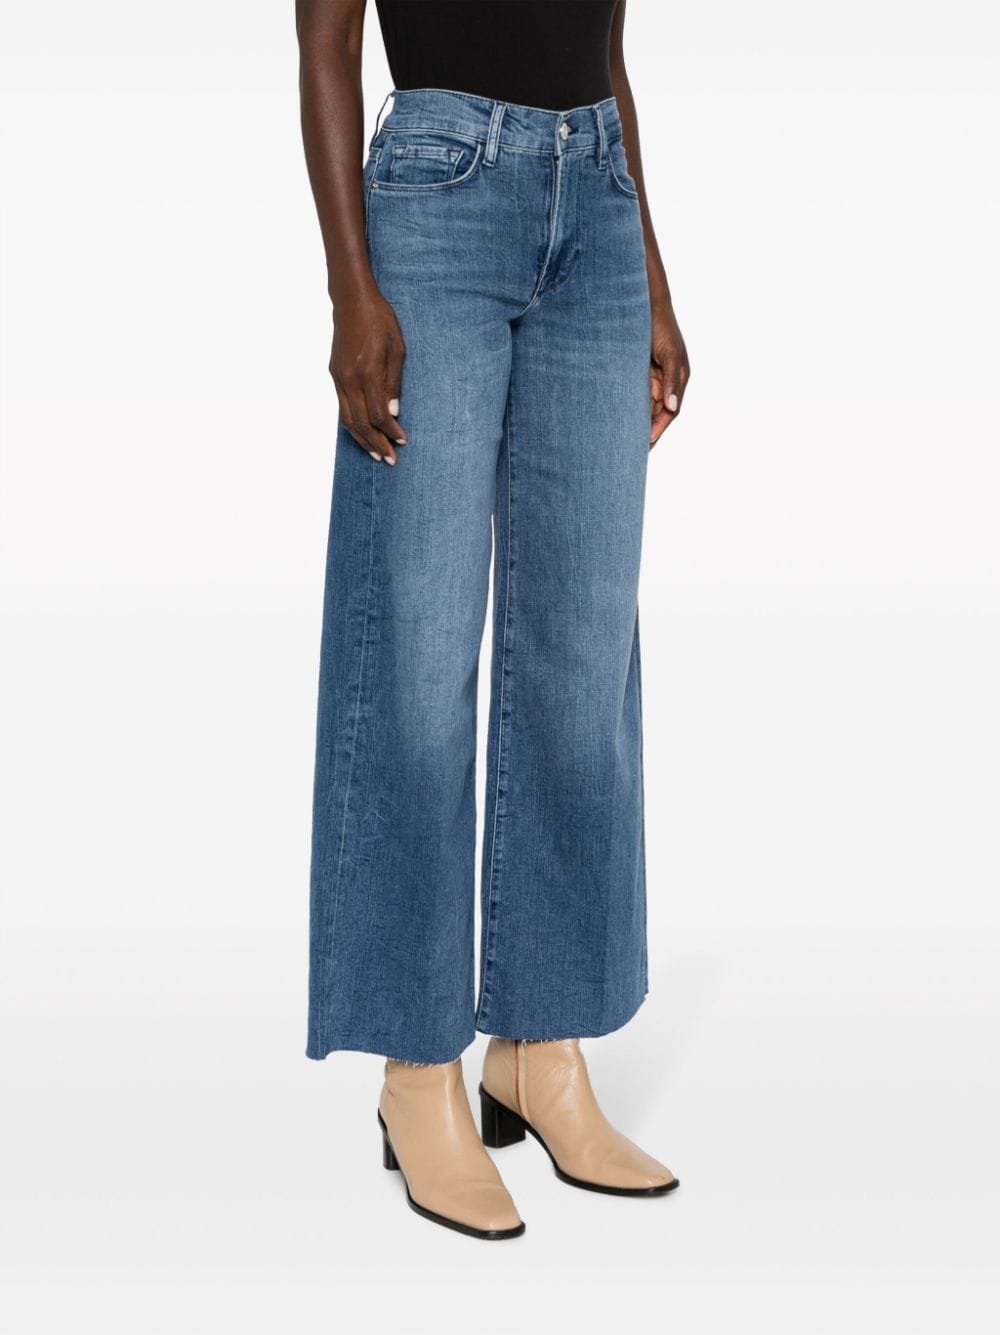 FRAME high-rise wide-leg Jeans - Farfetch